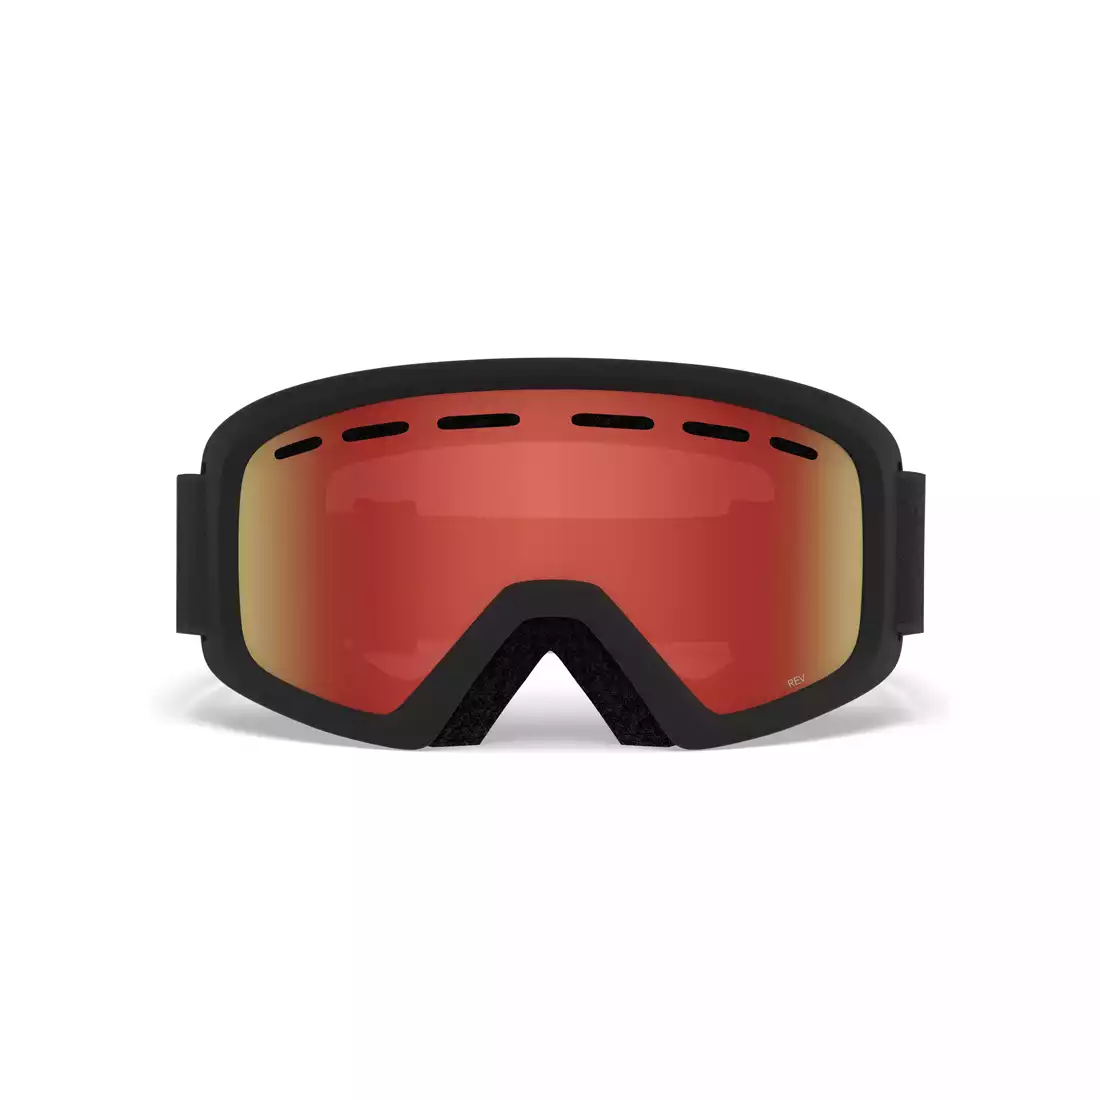 Juniorskie gogle narciarskie / snowboardowe REV BLACK ZOOM GR-7094685